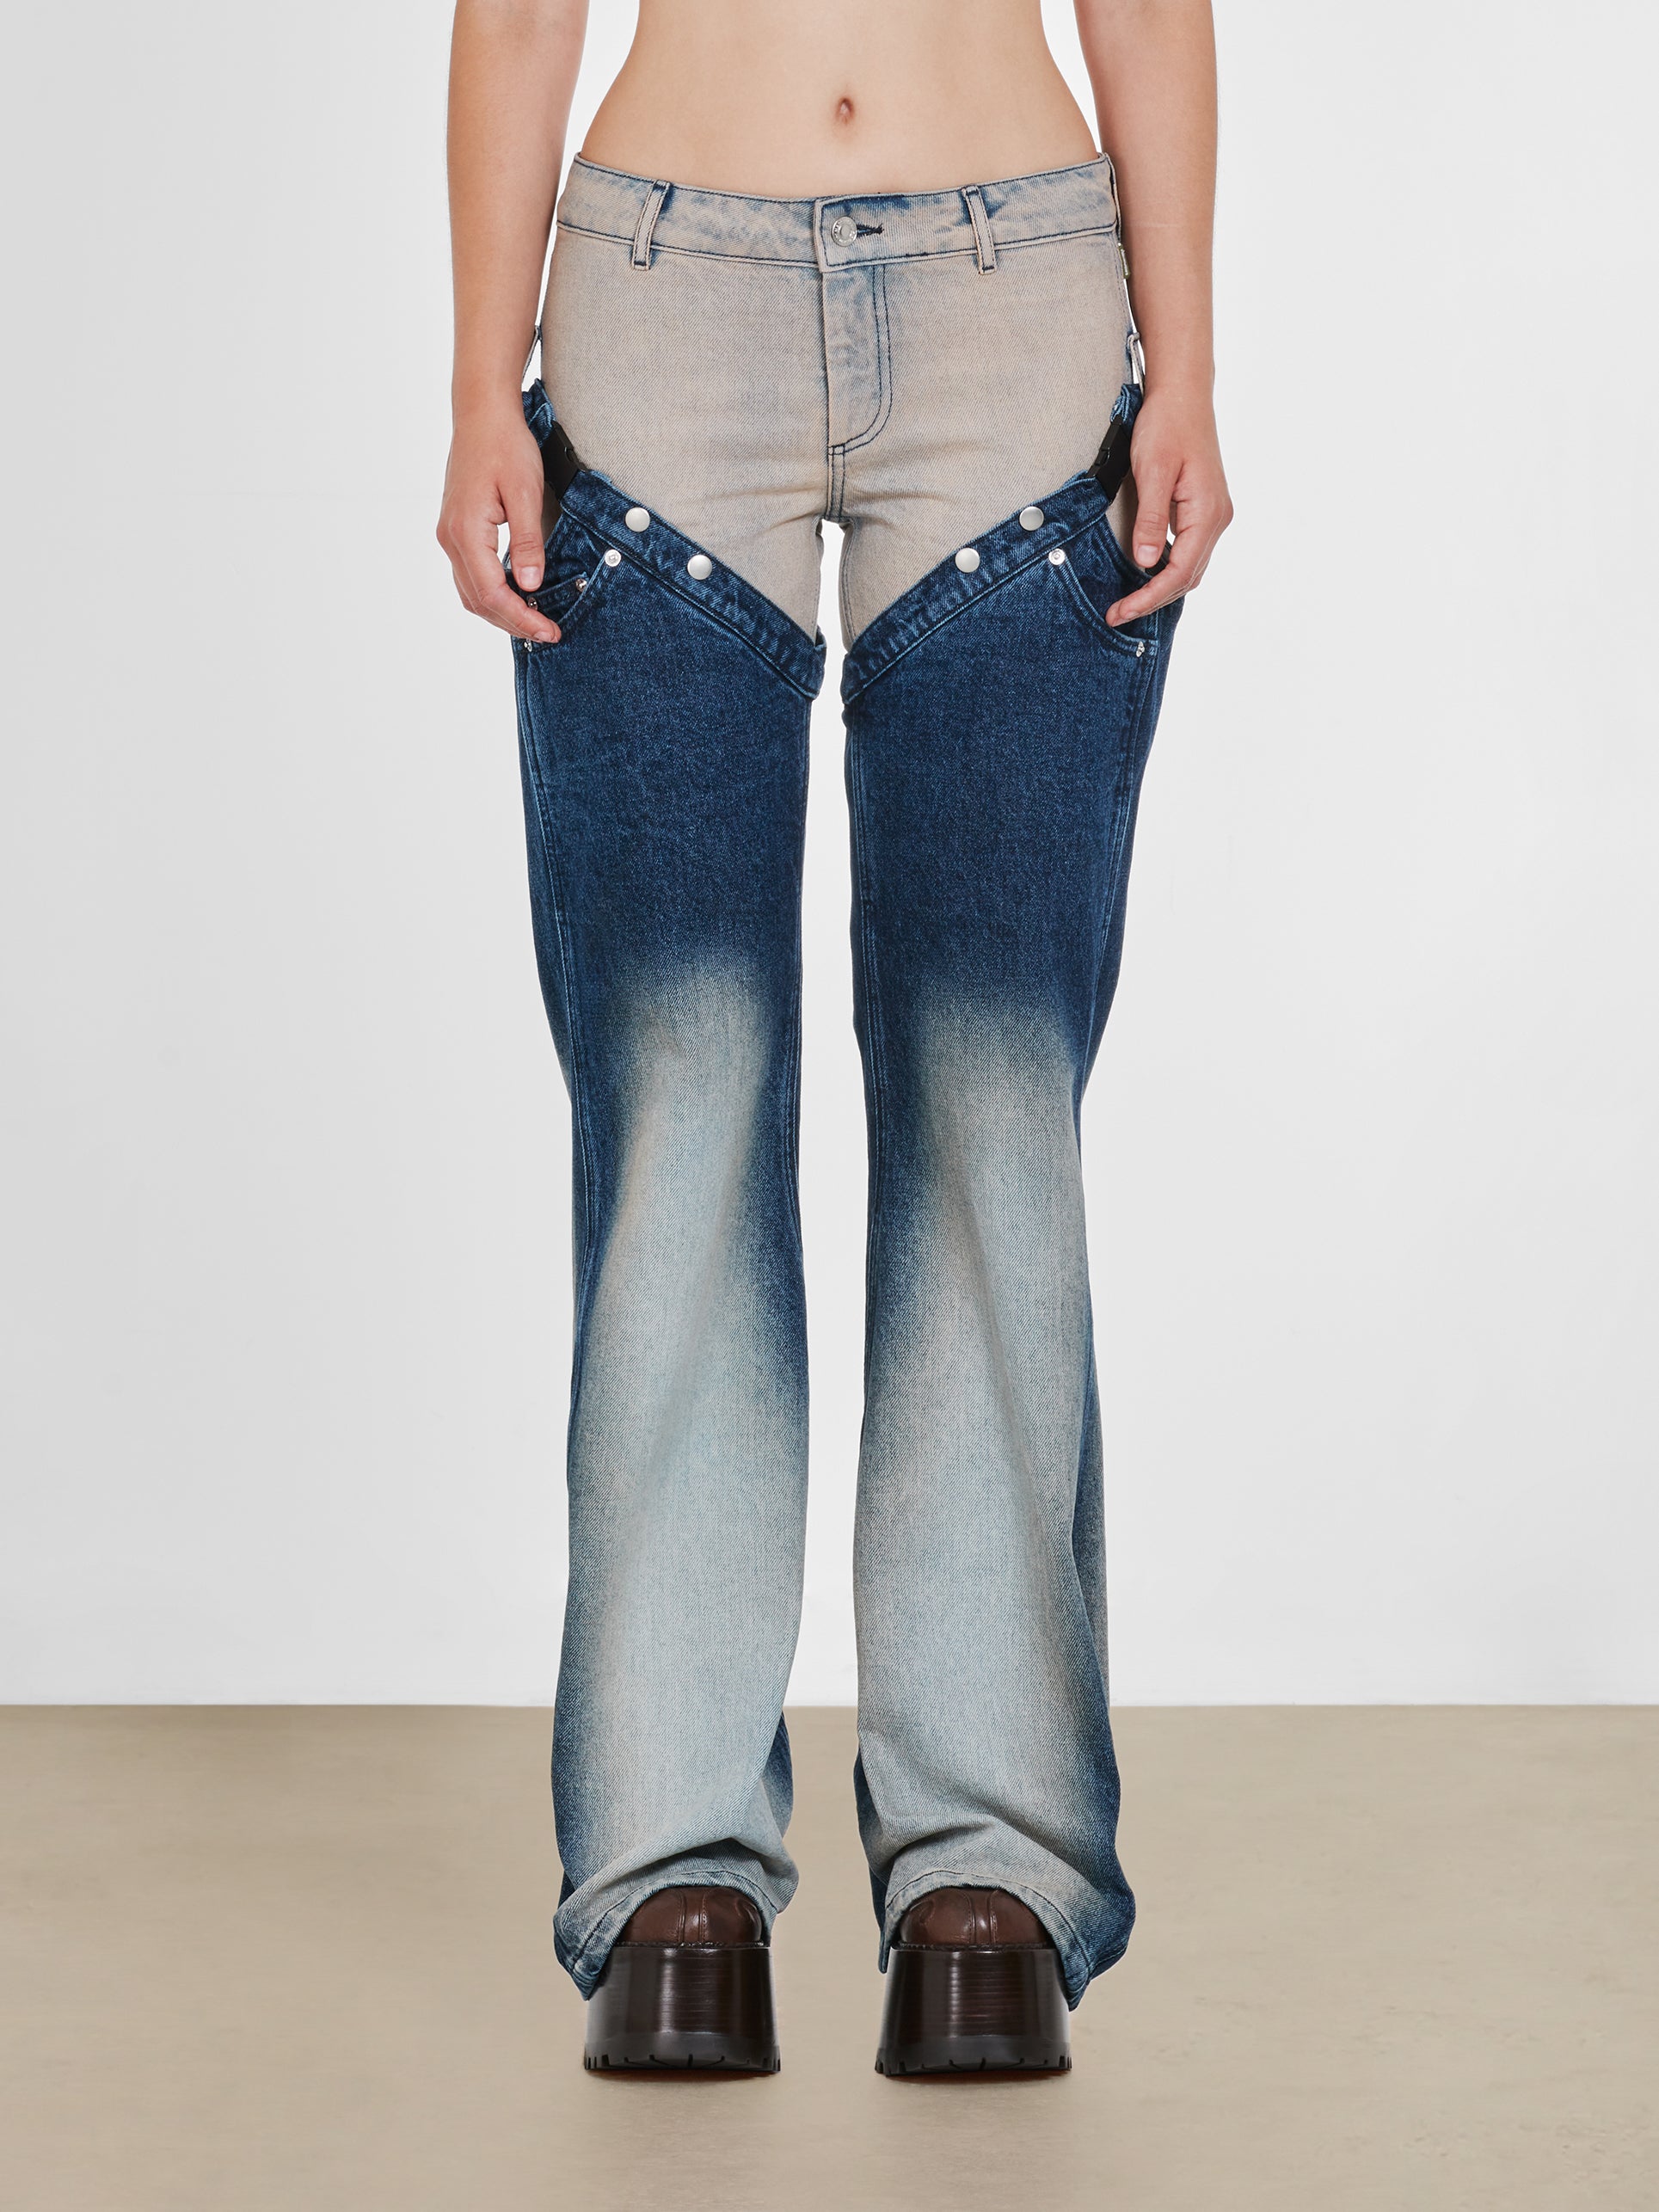 Heaven By Marc Jacobs - Women's Chap Washed Pants - (Indigo)